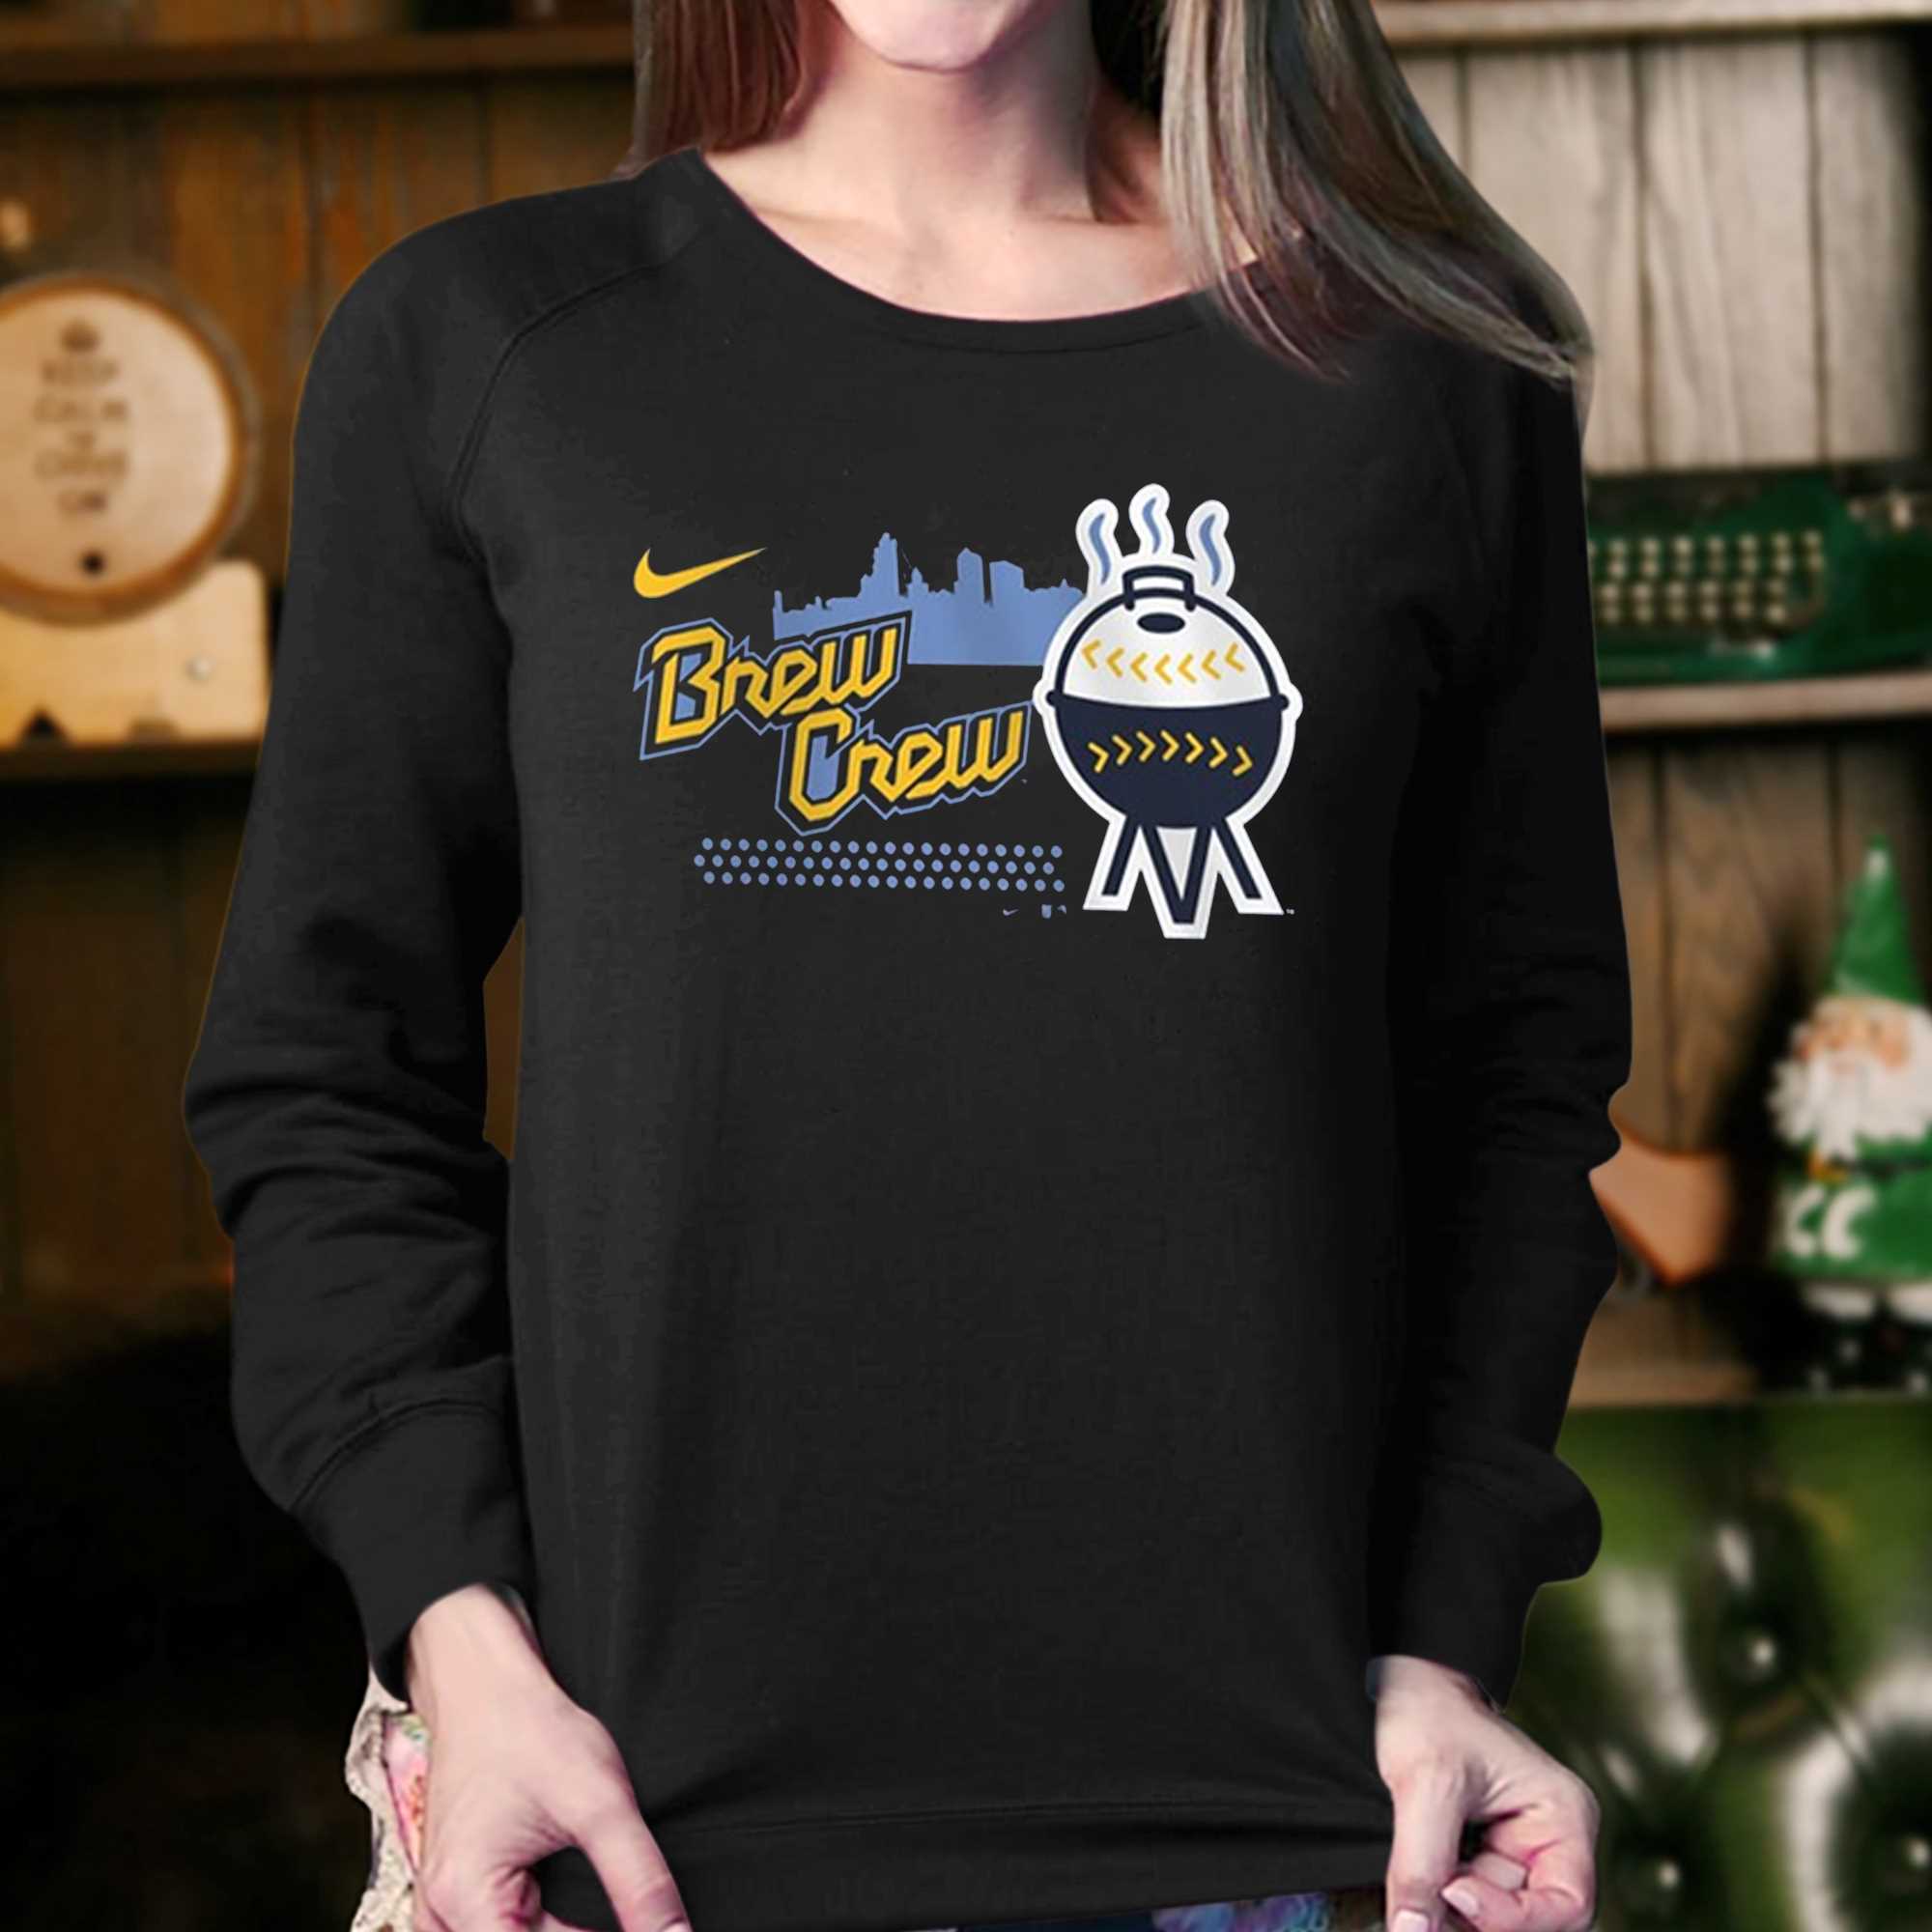 Milwaukee Brewers City Connect Shirt